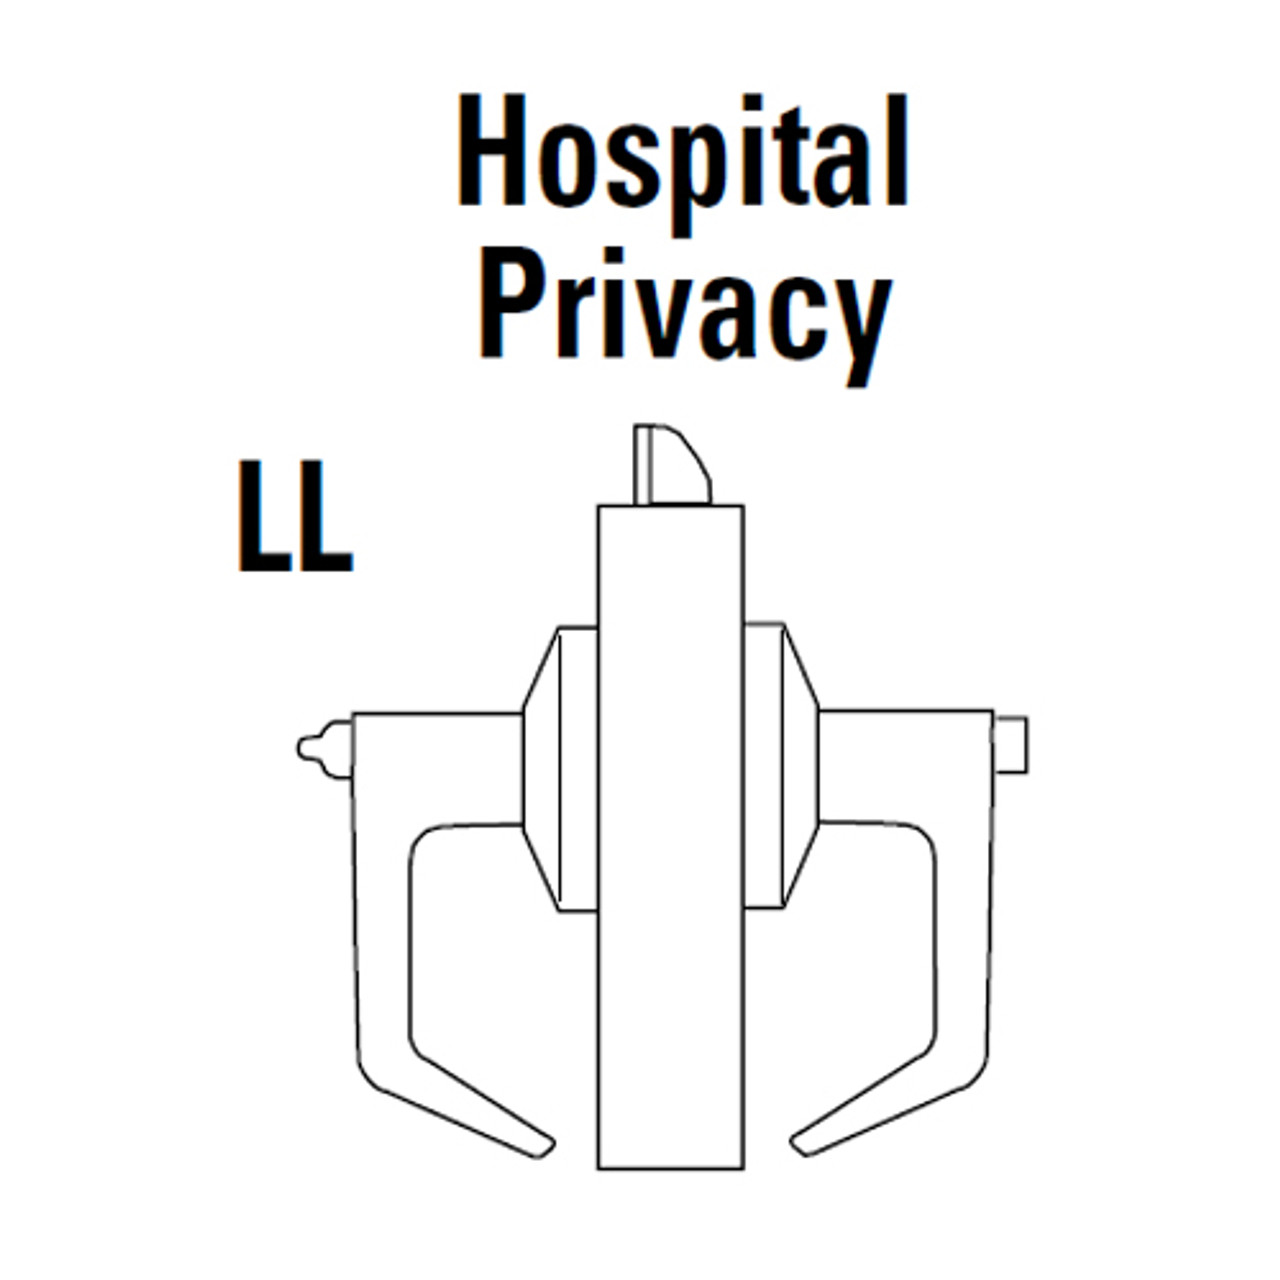 9K30LL14LSTK625 Best 9K Series Hospital Privacy Heavy Duty Cylindrical Lever Locks in Bright Chrome